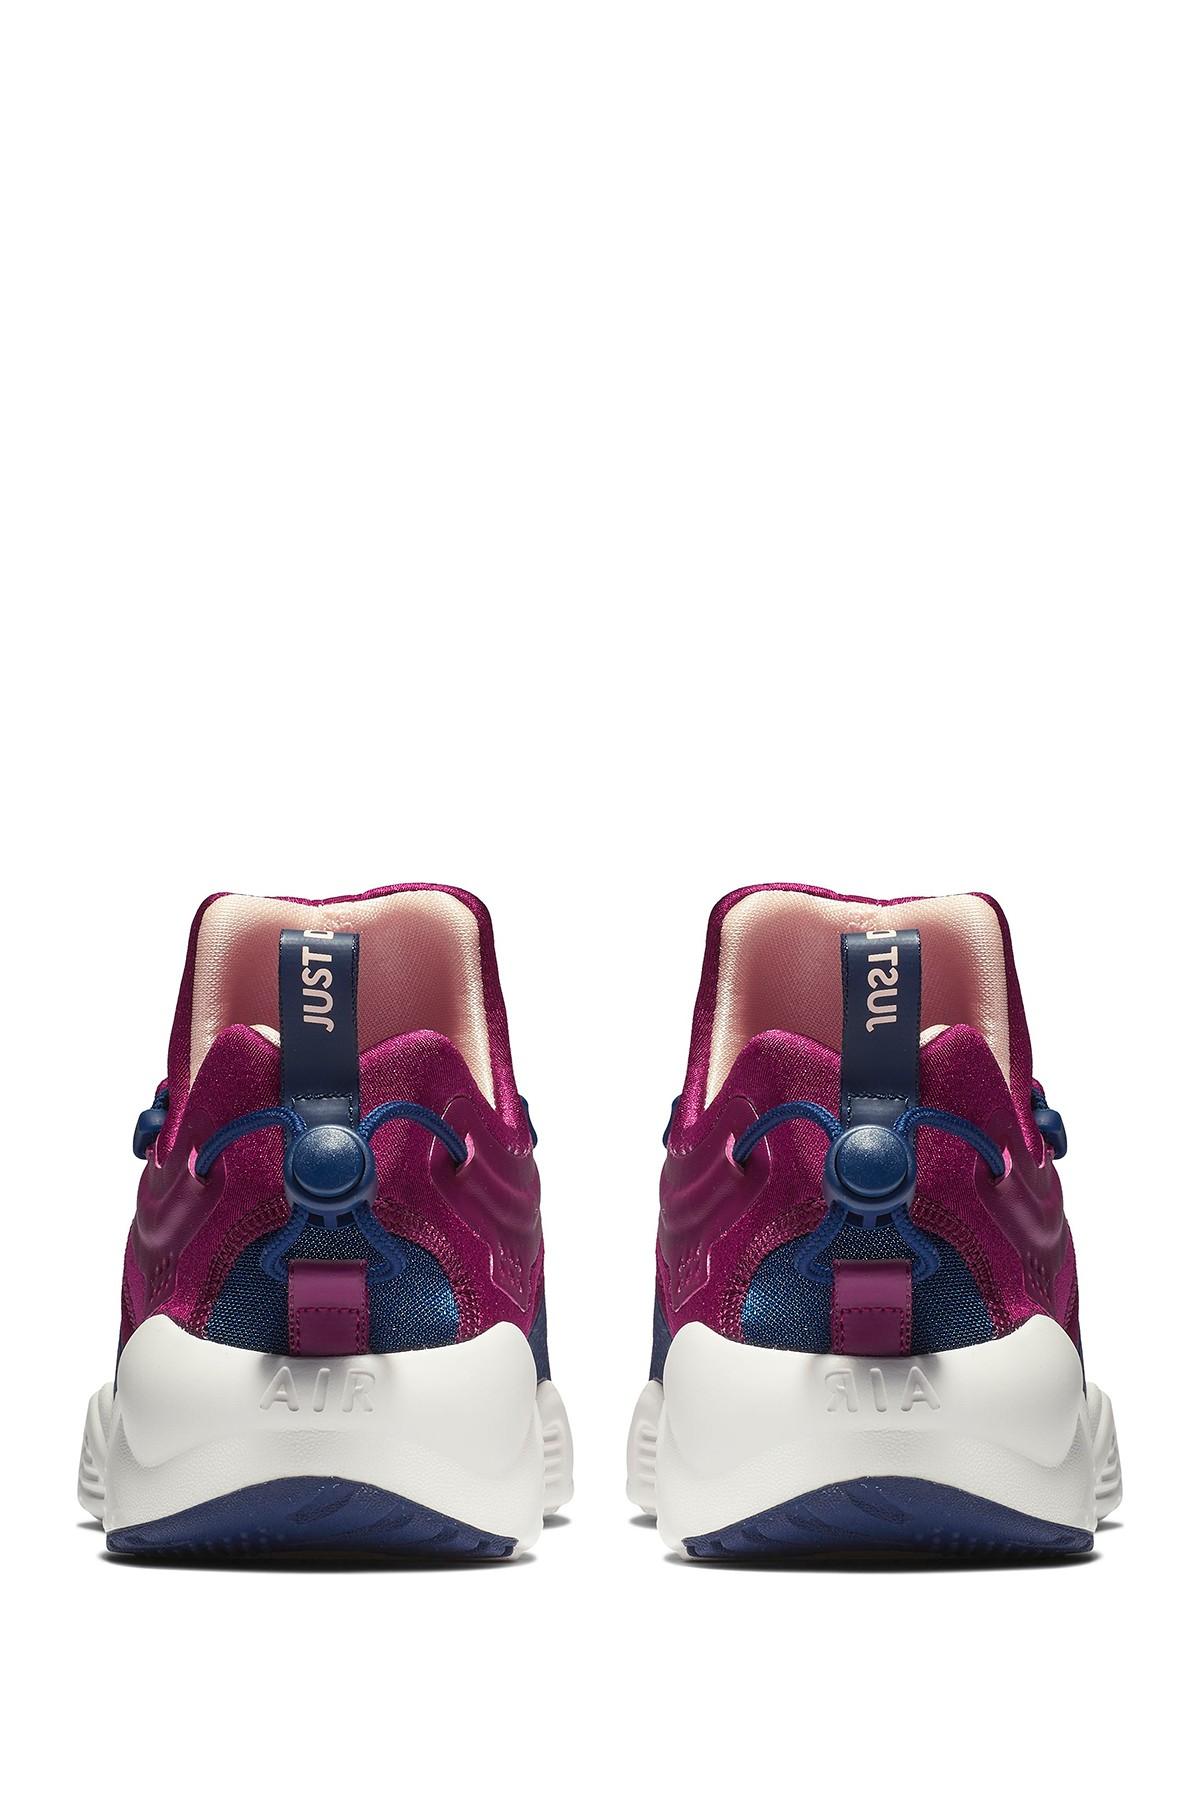 Nike Neoprene S Air Huarache City Move Premium Textile Trainers in  Berry/Navy (Purple) - Lyst